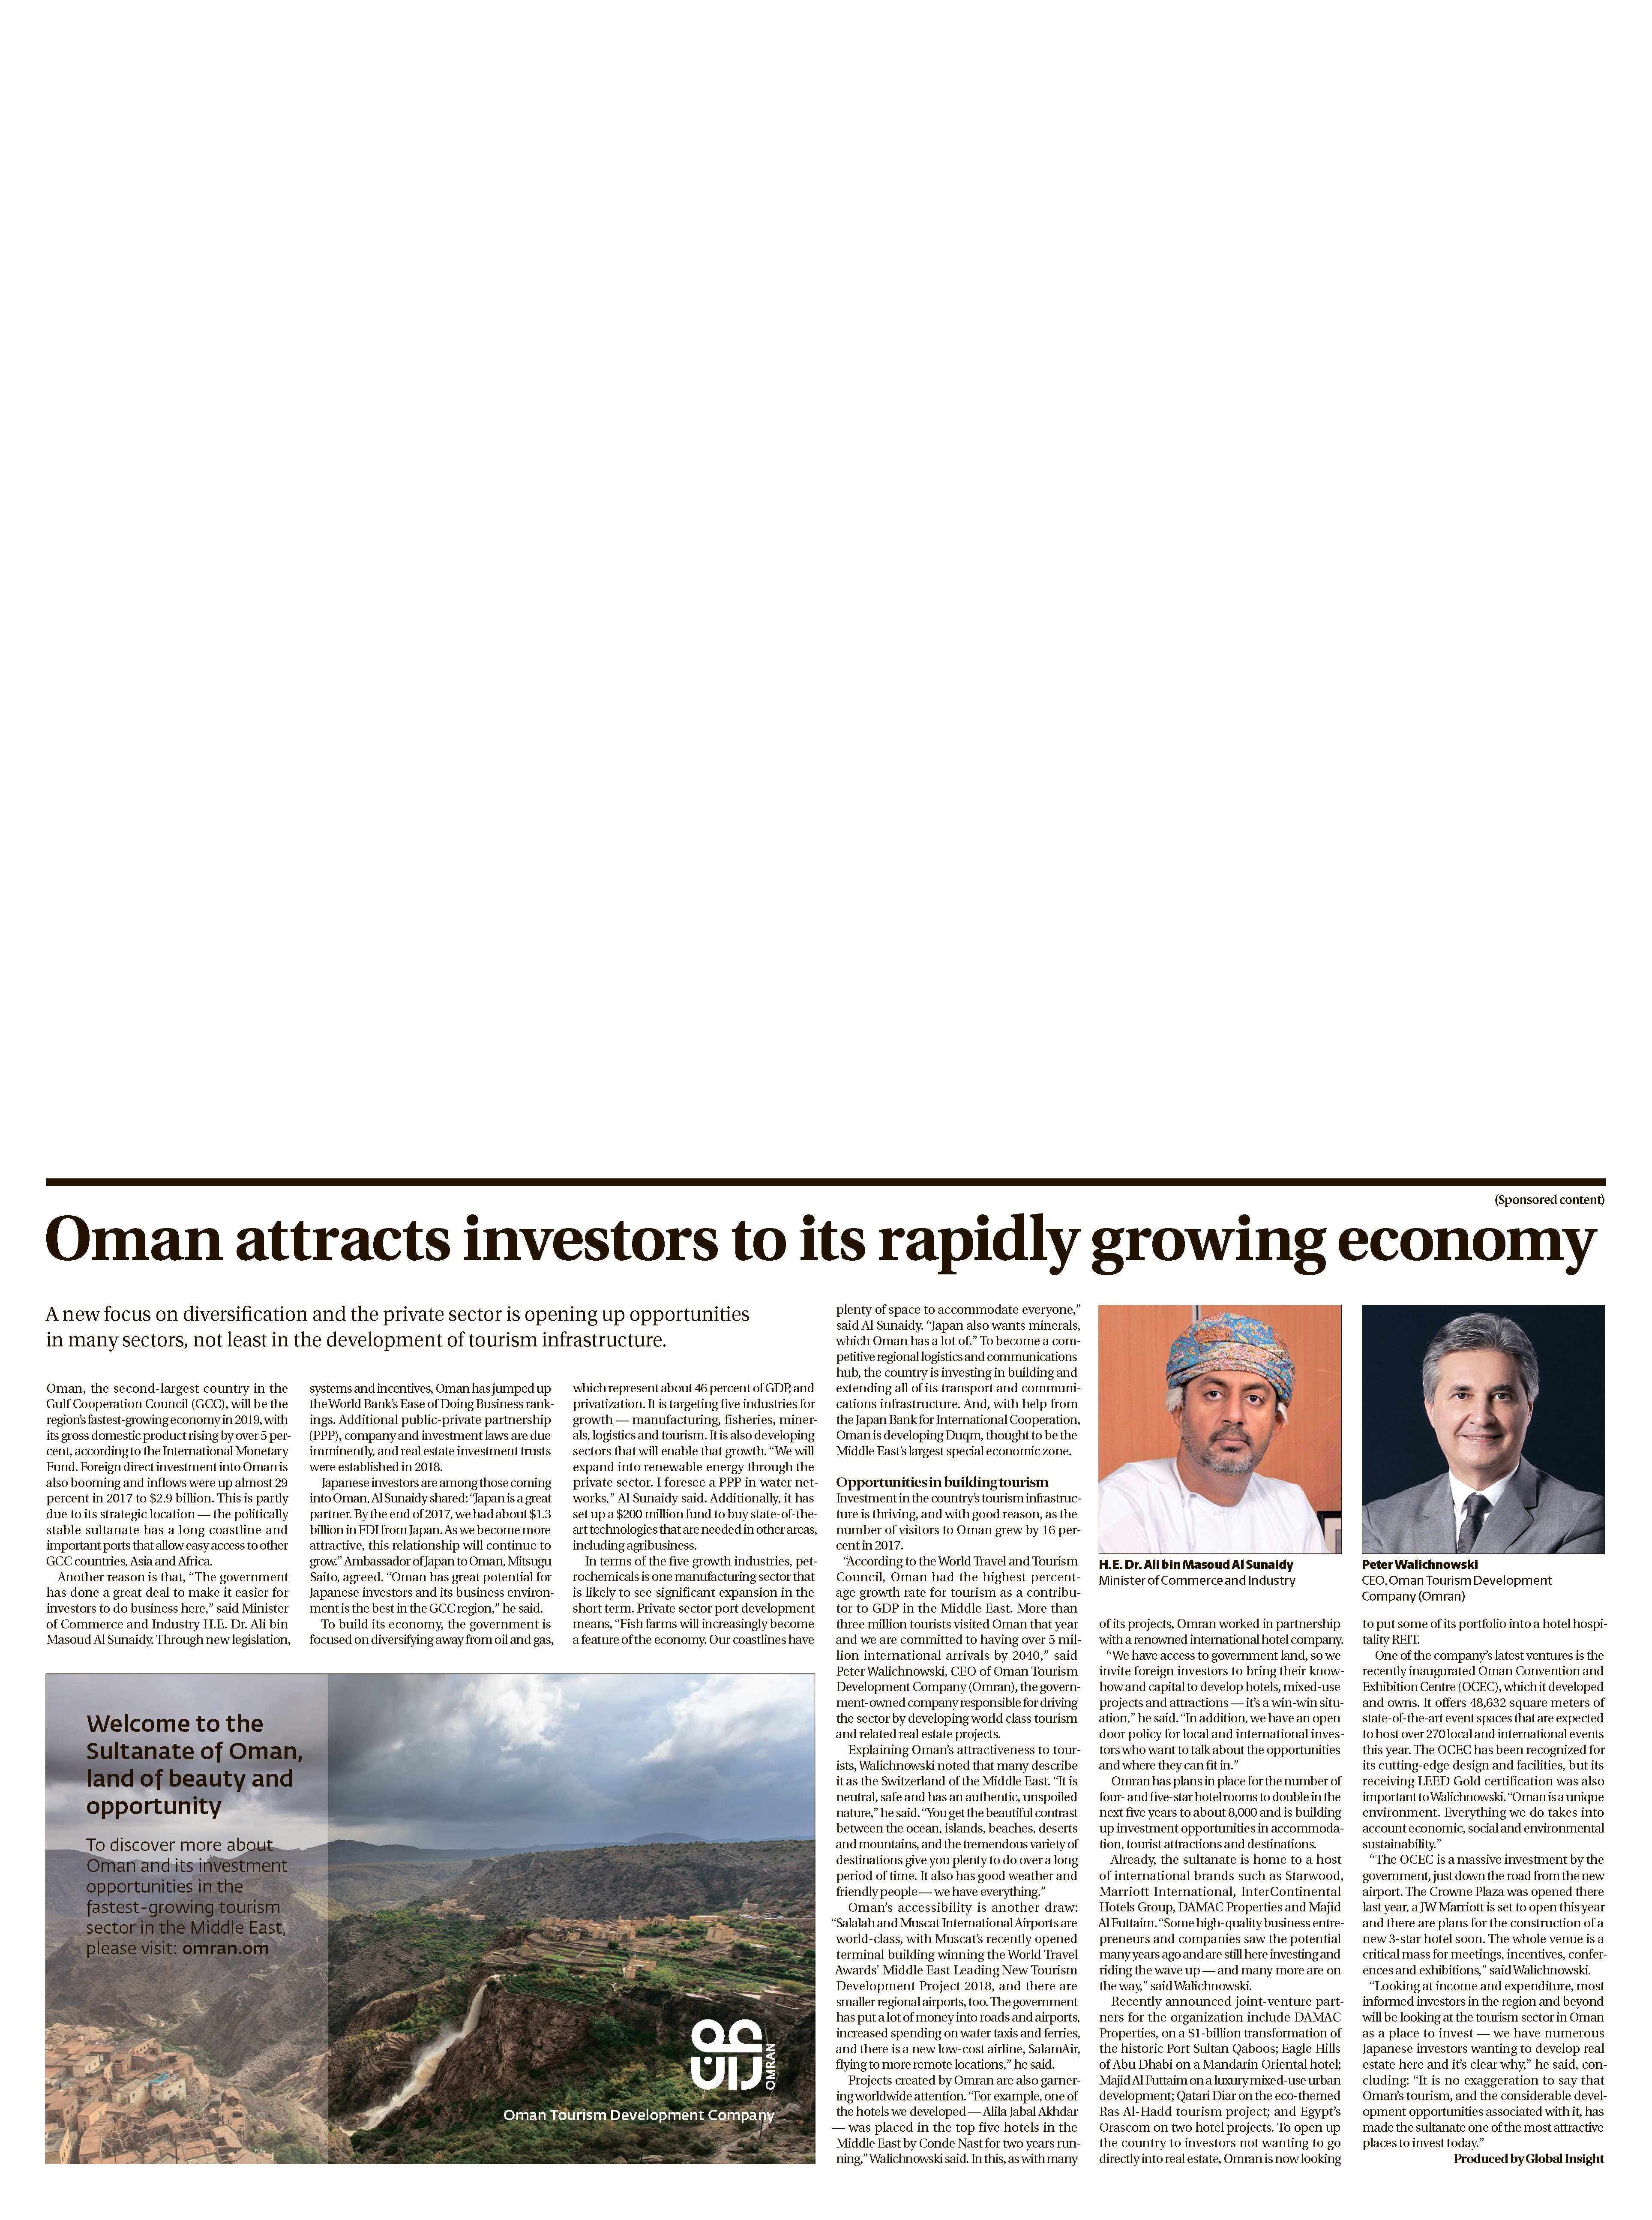 Global Insight: Oman (Nov. 27, 2018)